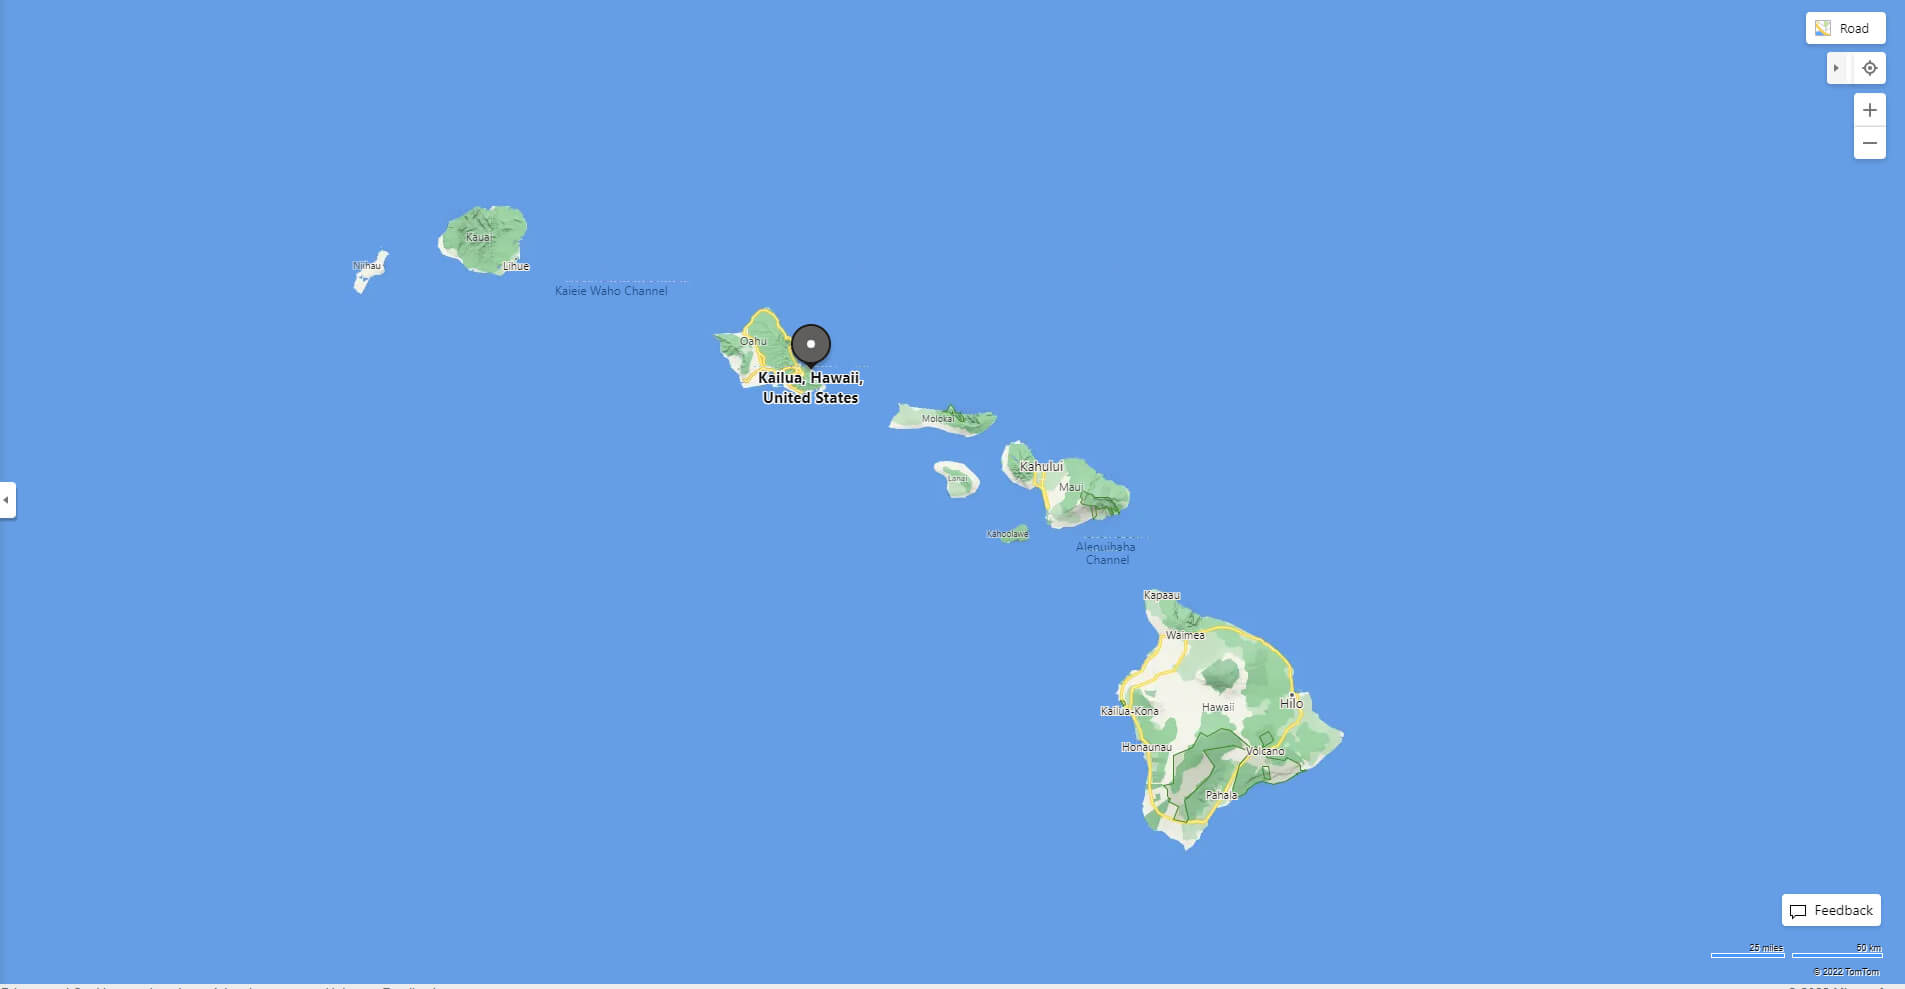 Where is Kailua in Hawaii